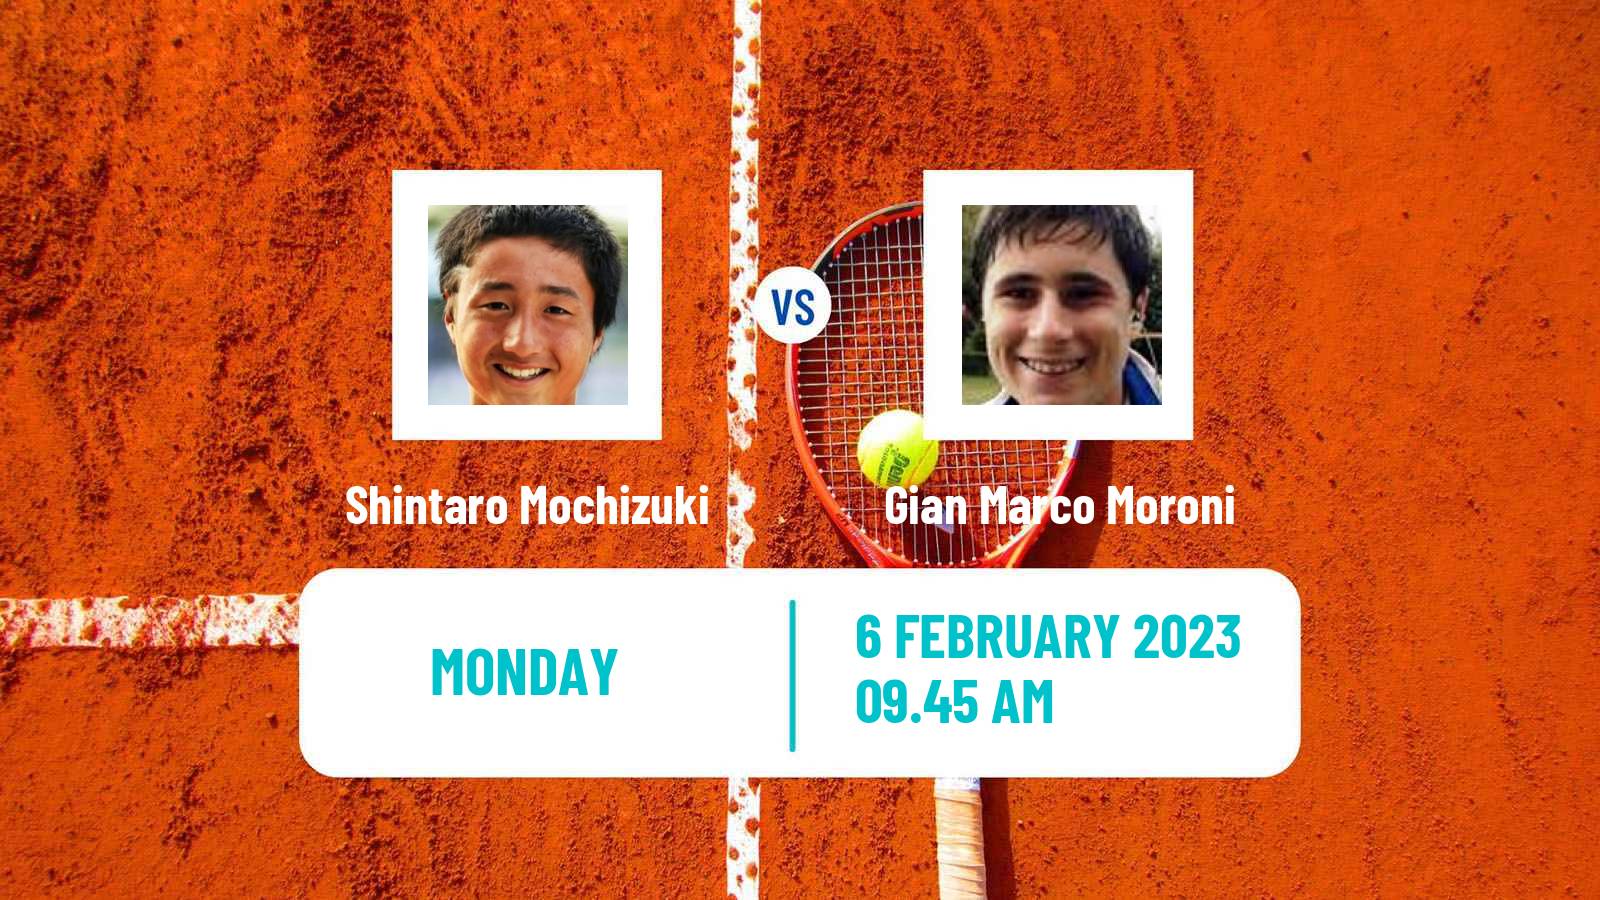 Tennis ATP Challenger Shintaro Mochizuki - Gian Marco Moroni